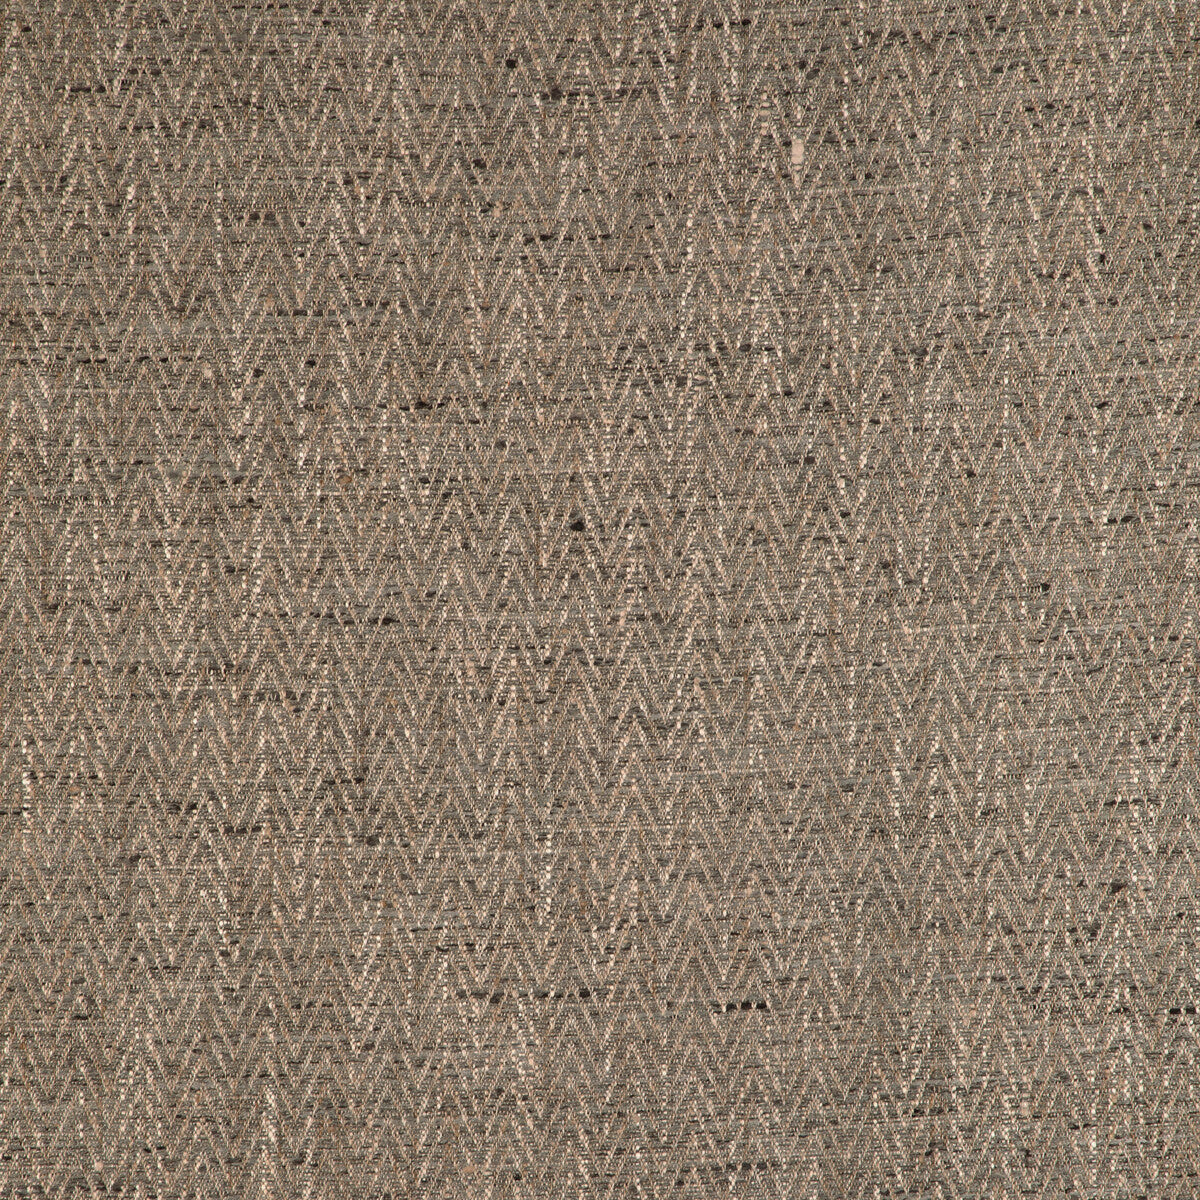 Kravet Smart fabric in 34092-6106 color - pattern 34092.6106.0 - by Kravet Smart